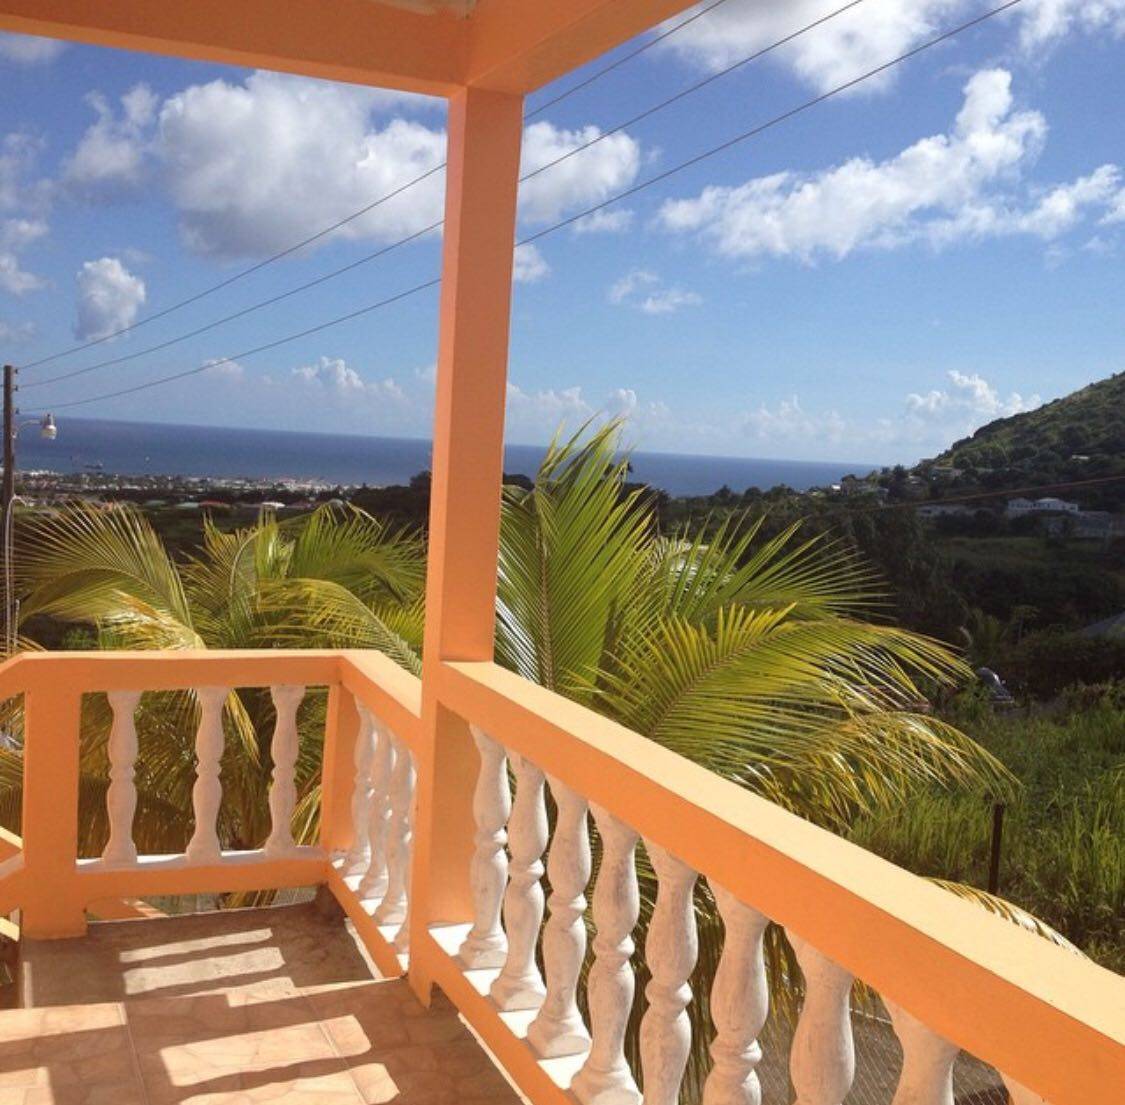 St Kitts Real Estate, Паспорт Сент-Китса и Невиса, Недвижимость Сент-Китс, Сент-Китс и Невис, St Kitts Property For Sale